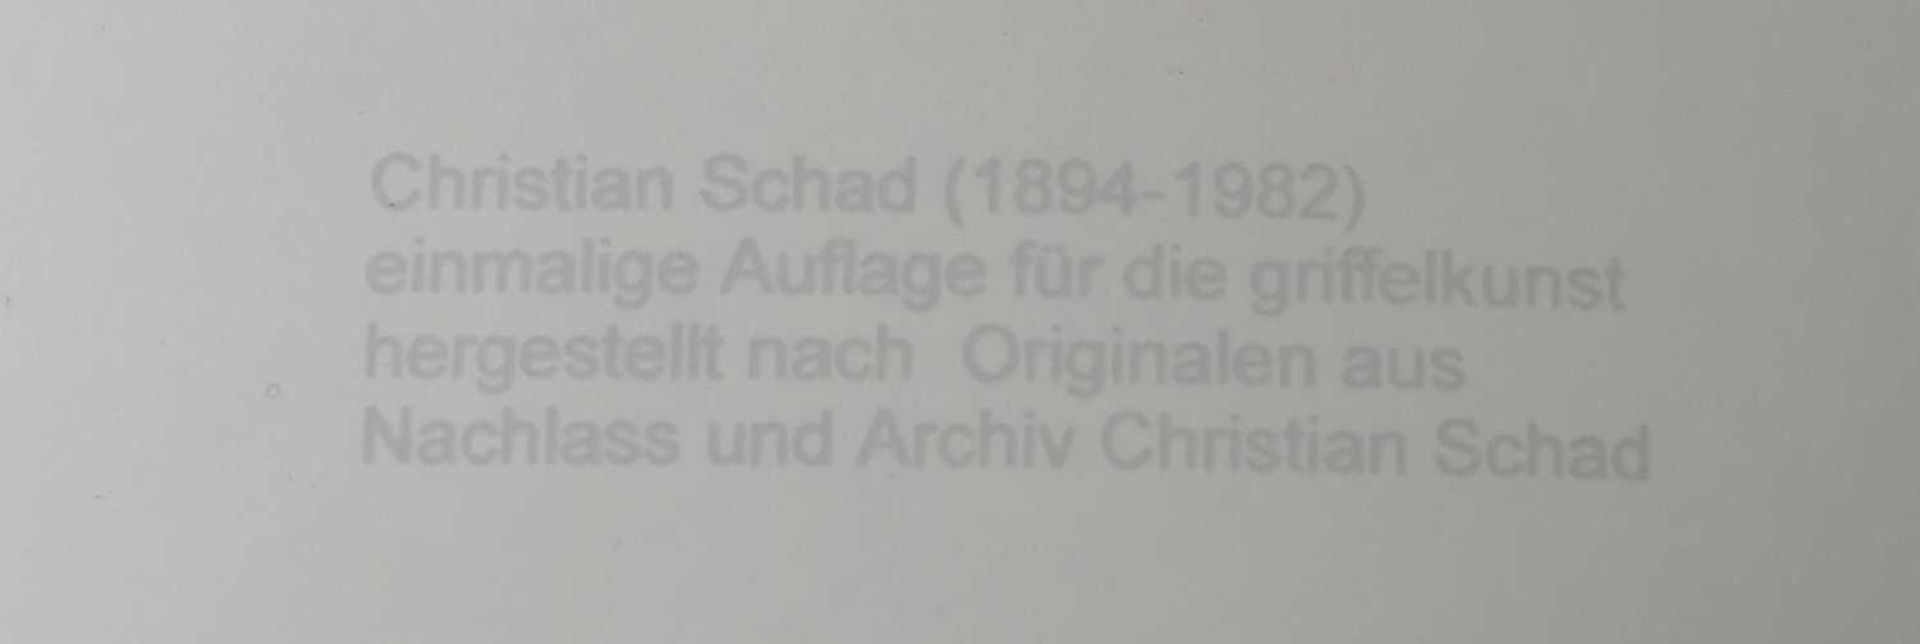 CHRISTIAN SCHAD (1894 Miesbach/Oberbayern - 1982 Stuttgart) - Image 3 of 3